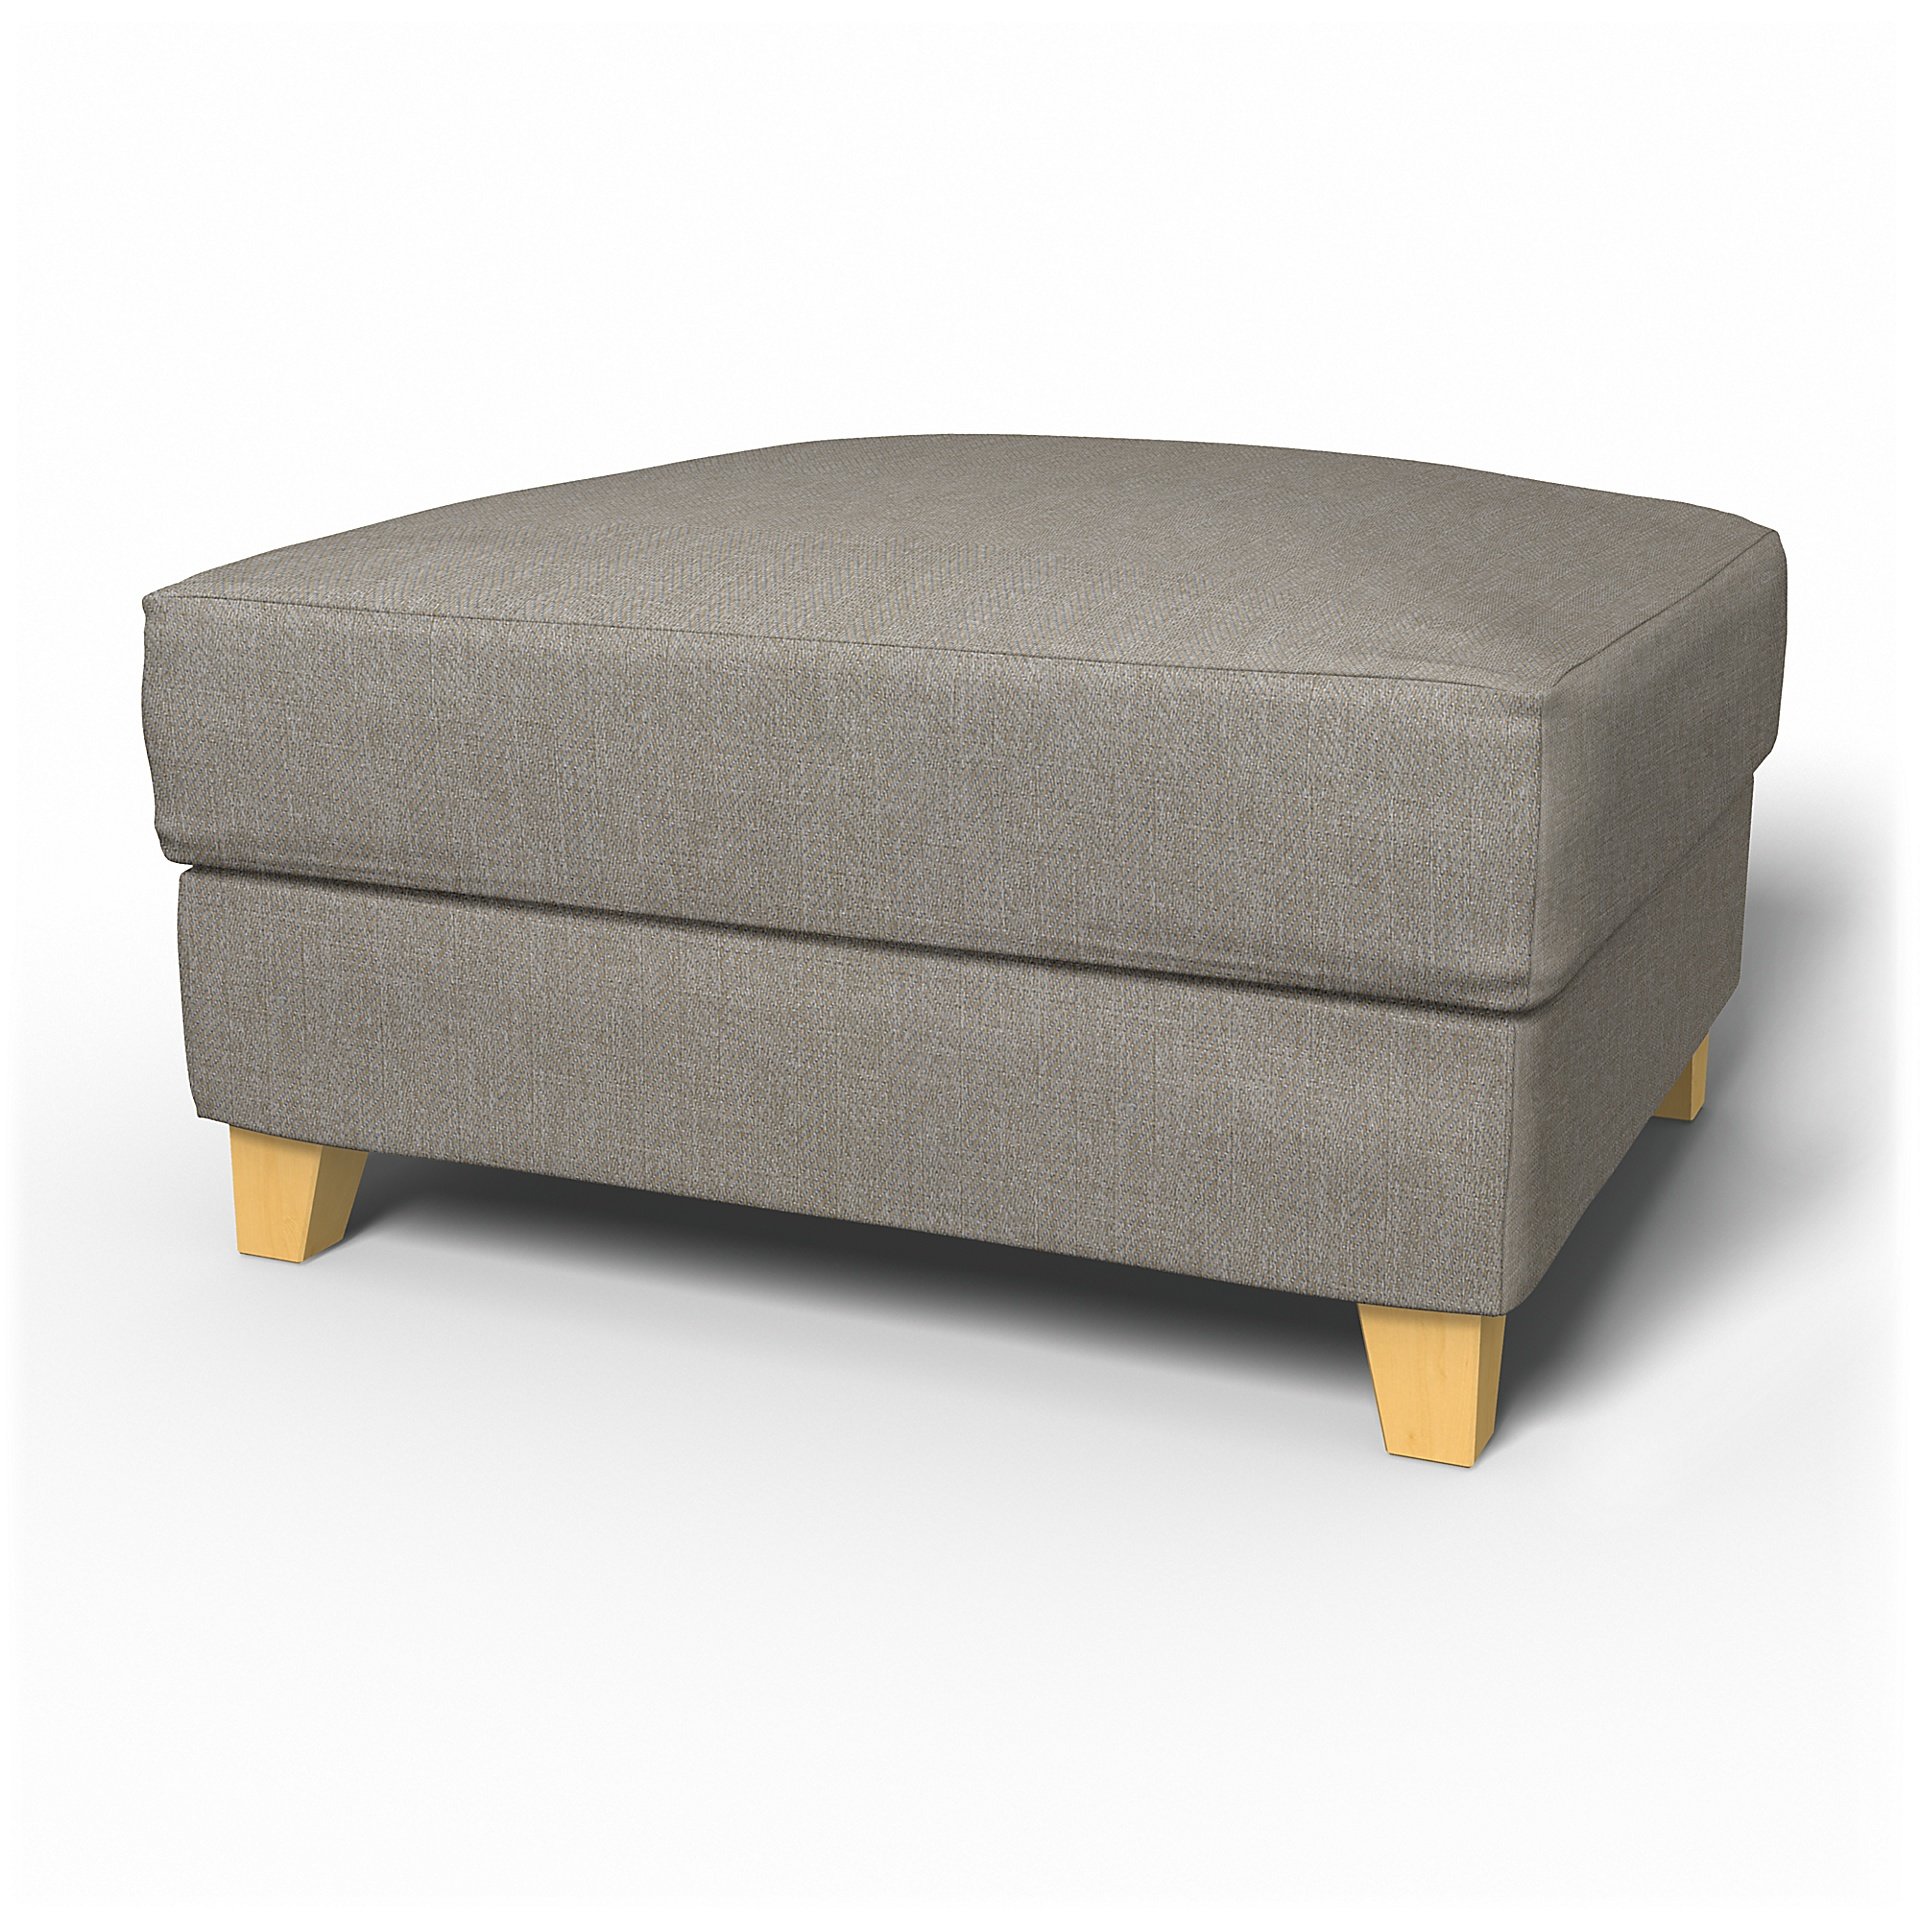 IKEA - Backa Footstool Cover, Greige, Boucle & Texture - Bemz